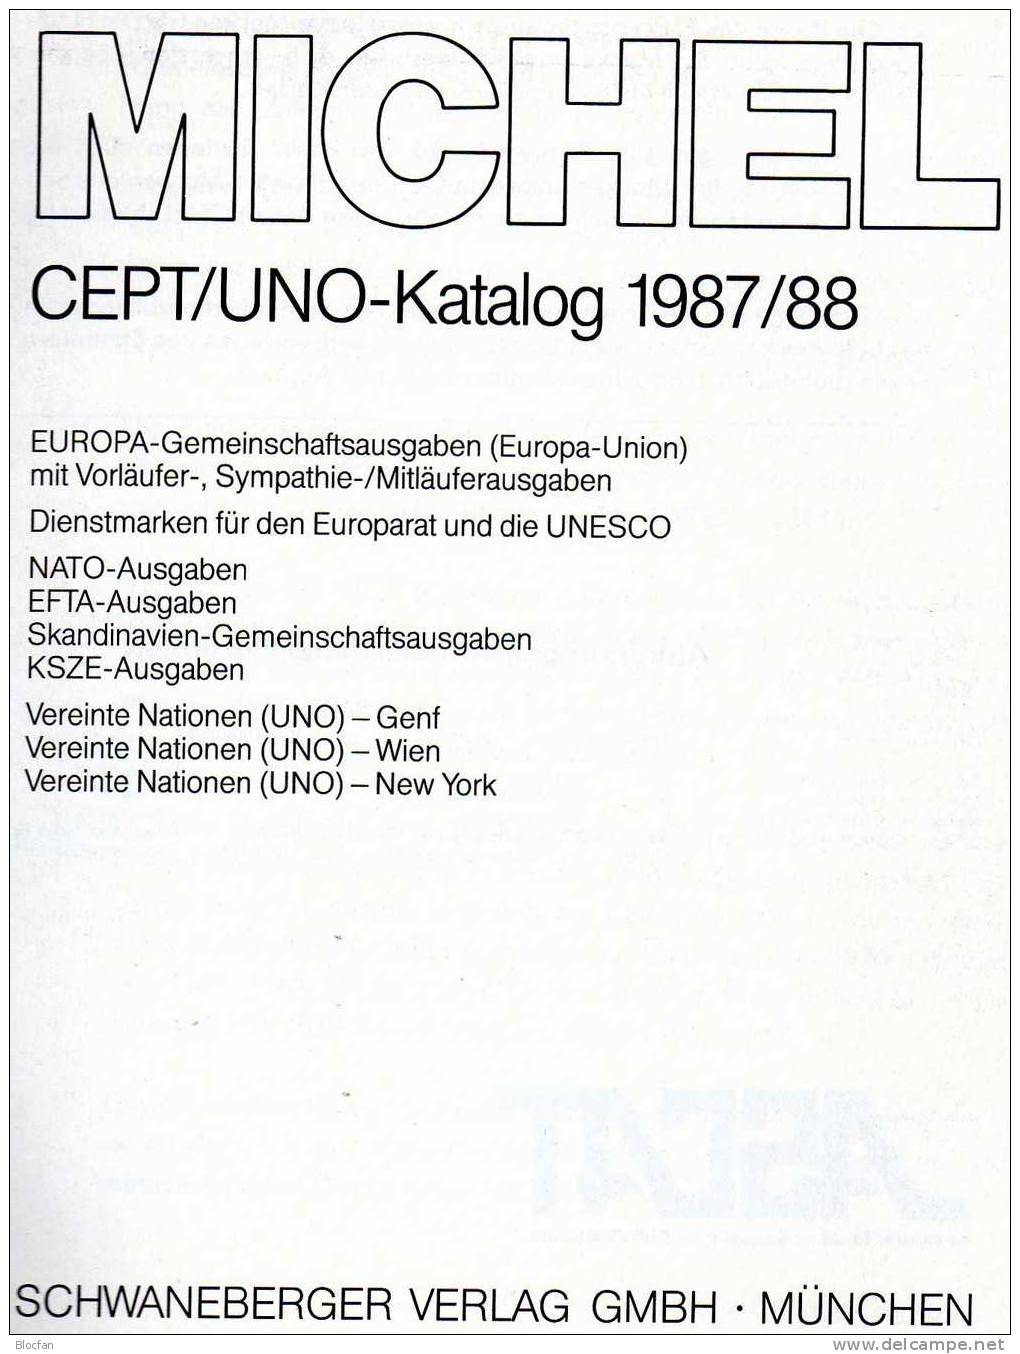 CEPT/UNO Michel Katalog 1987 Europa-Motiv Antiquarisch 8€ EUROPE Stamps Catalogue Of The Country /topics UN Genf Wien NY - Frankrijk